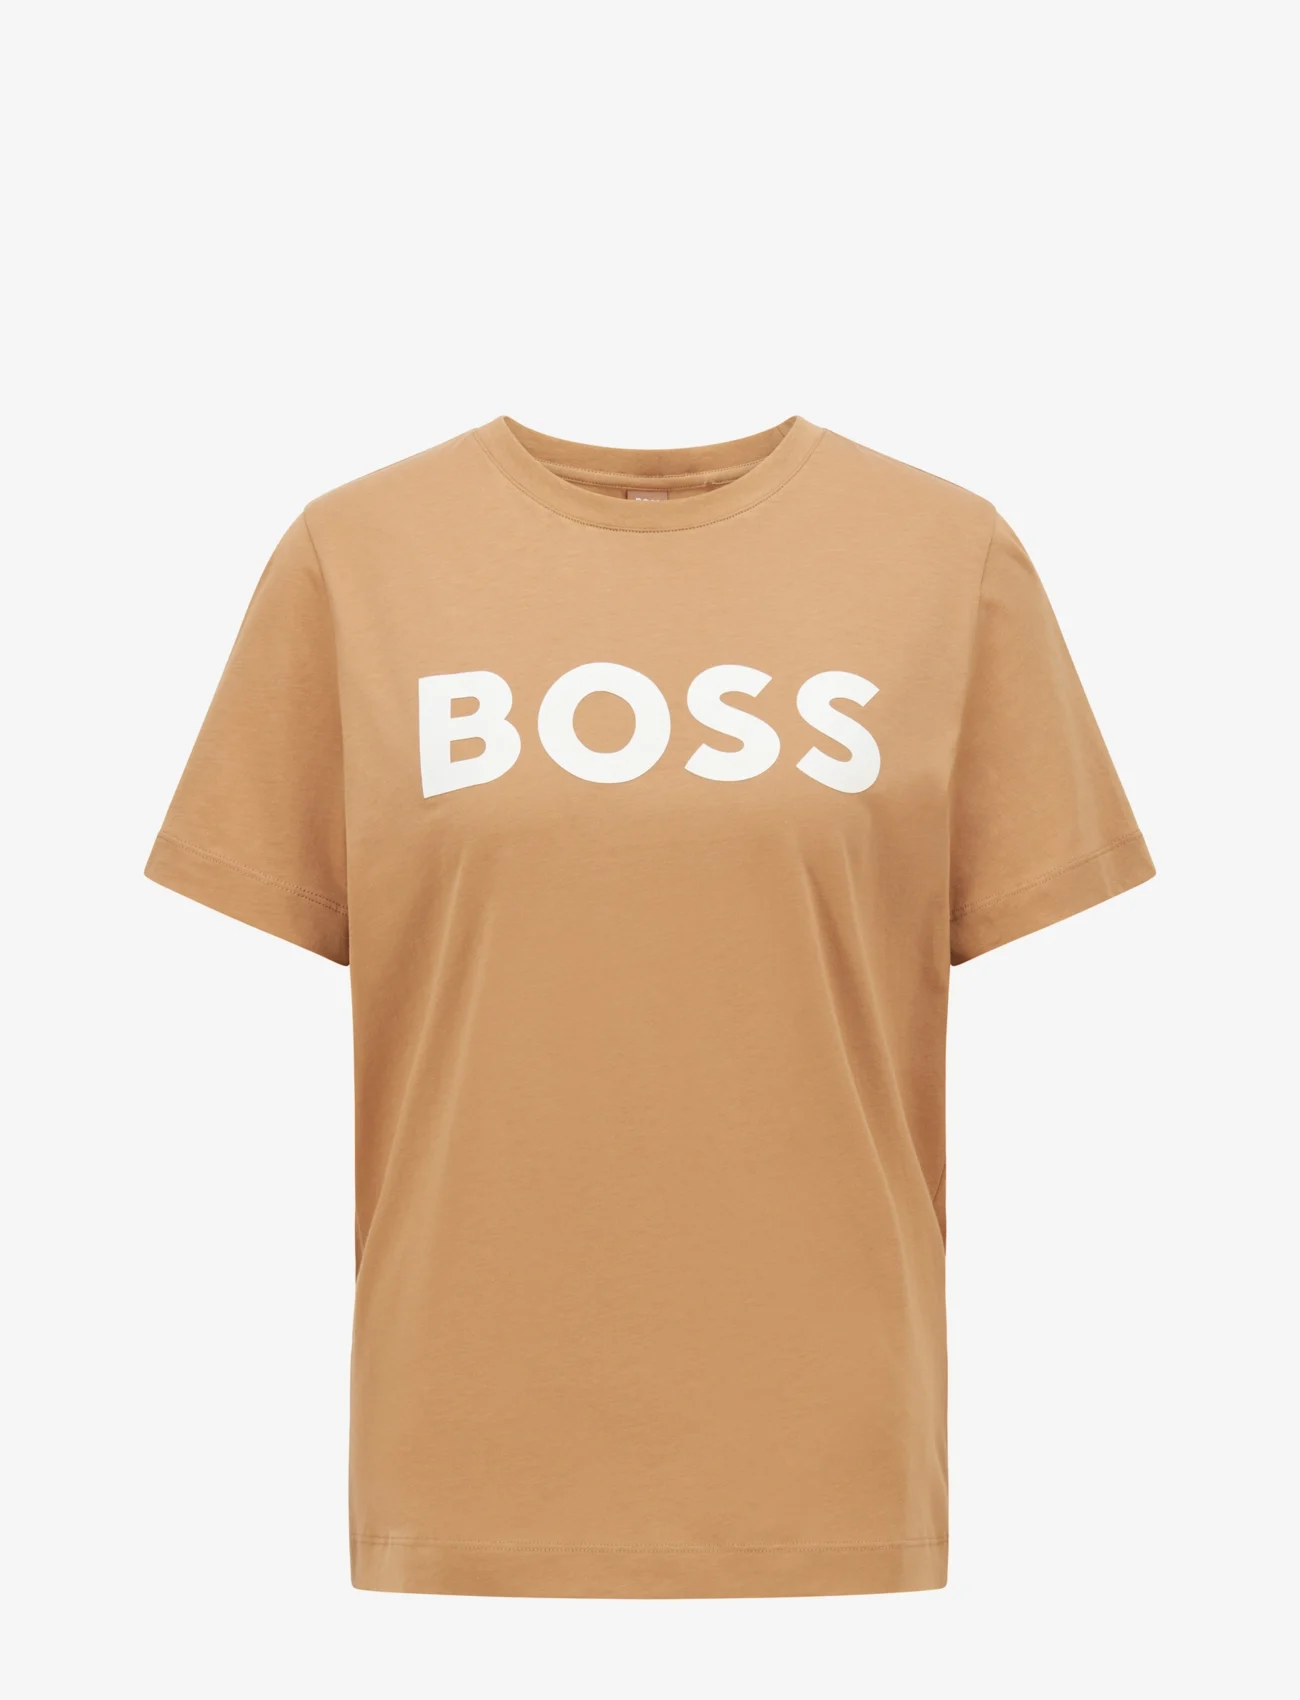 BOSS - Econte - t-shirts - medium beige - 0